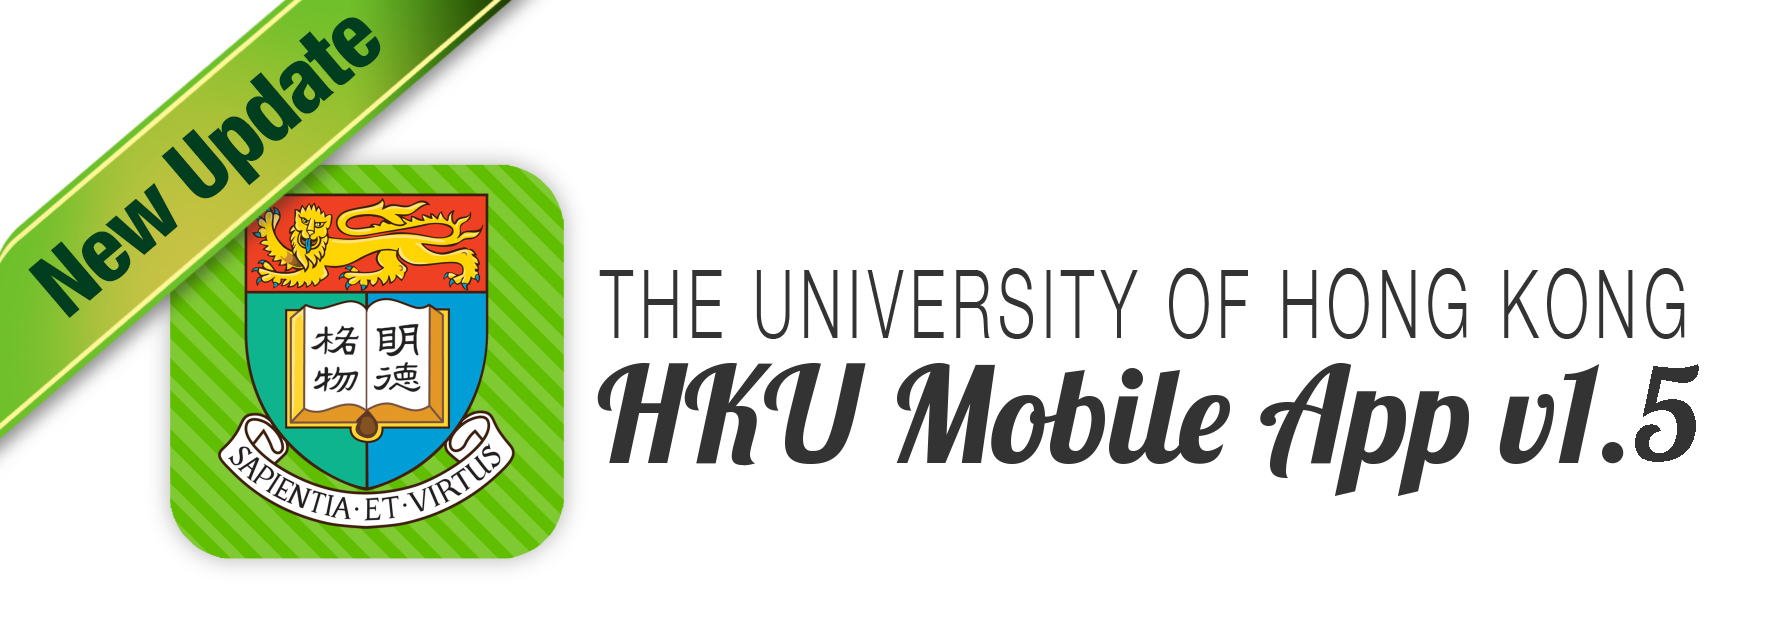 HKU Mobile App v1.5